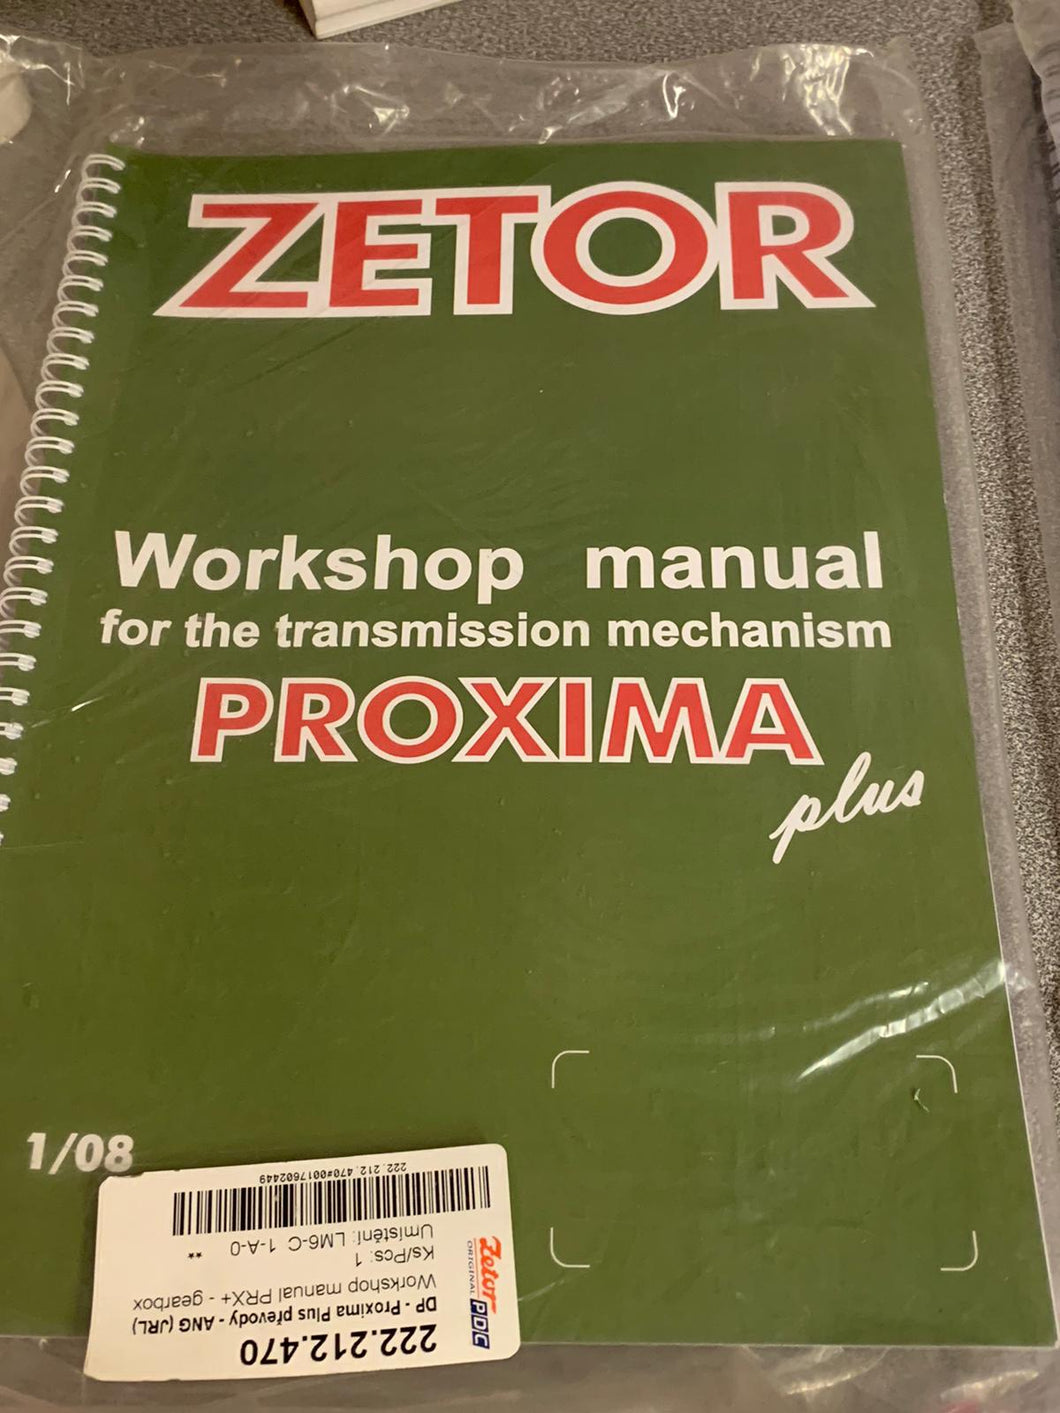 Workshop manual for Proxima Plus Transmission Mechanism